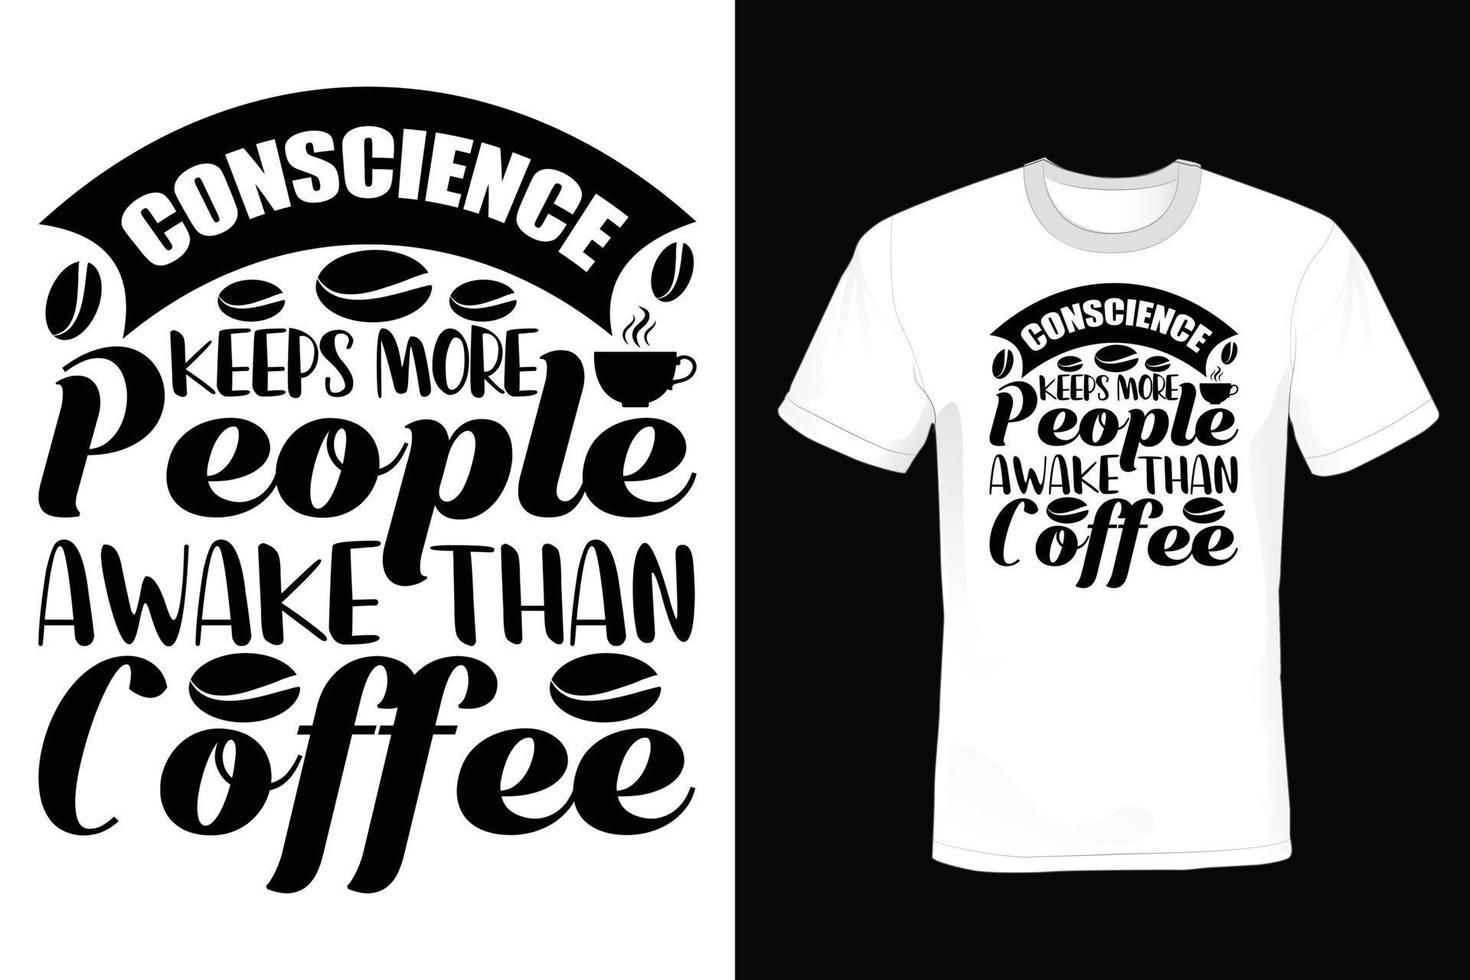 kaffe t-shirt design, vintage, typografi vektor